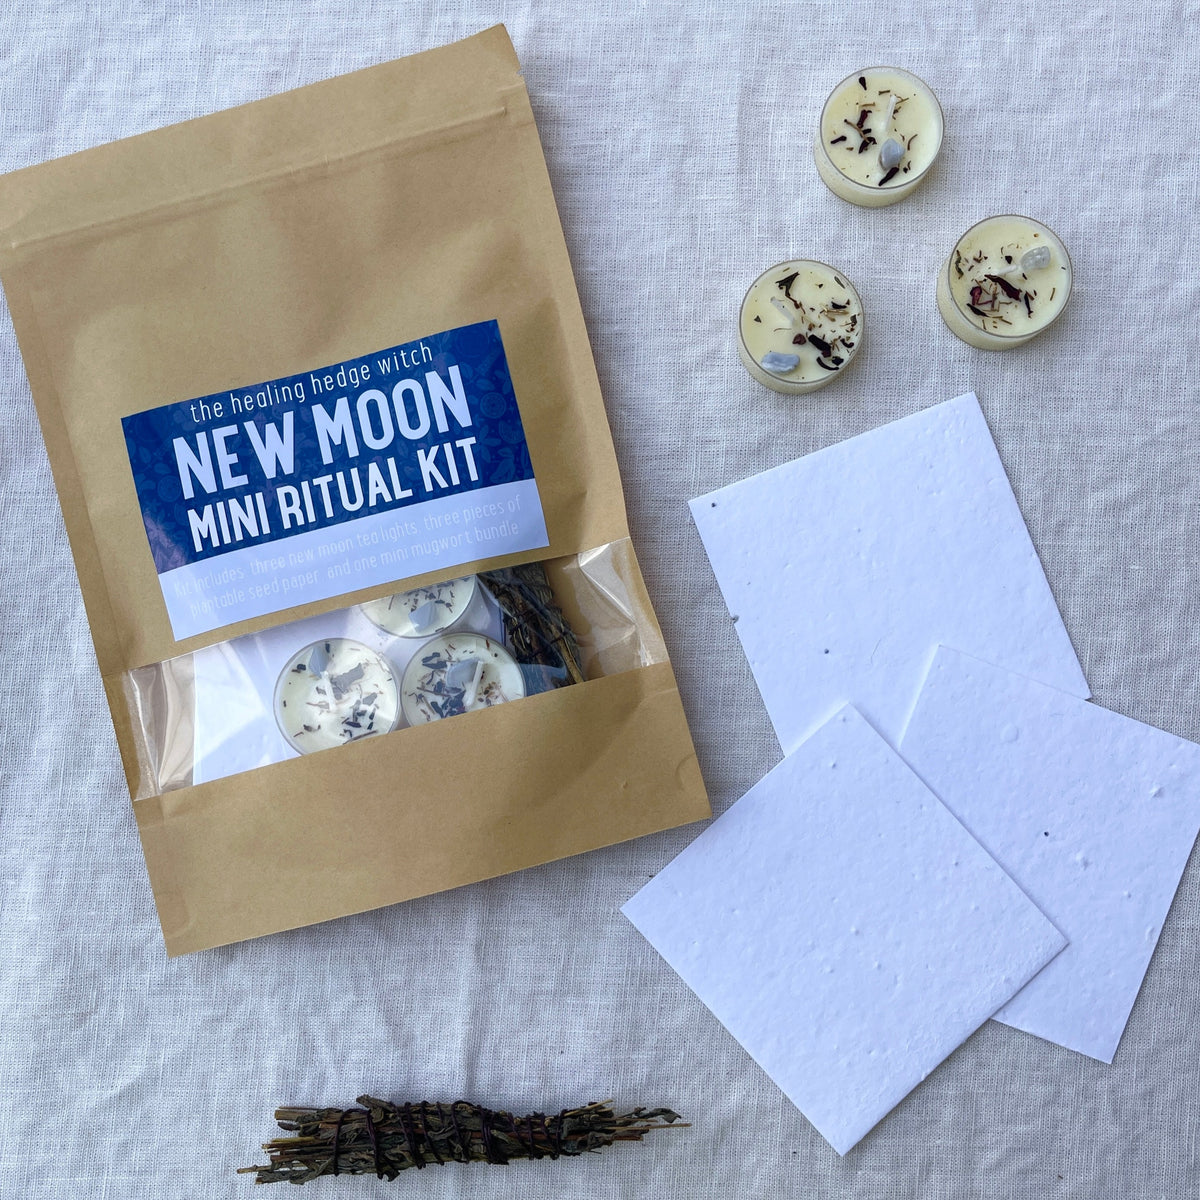 New Moon Mini Ritual Kit